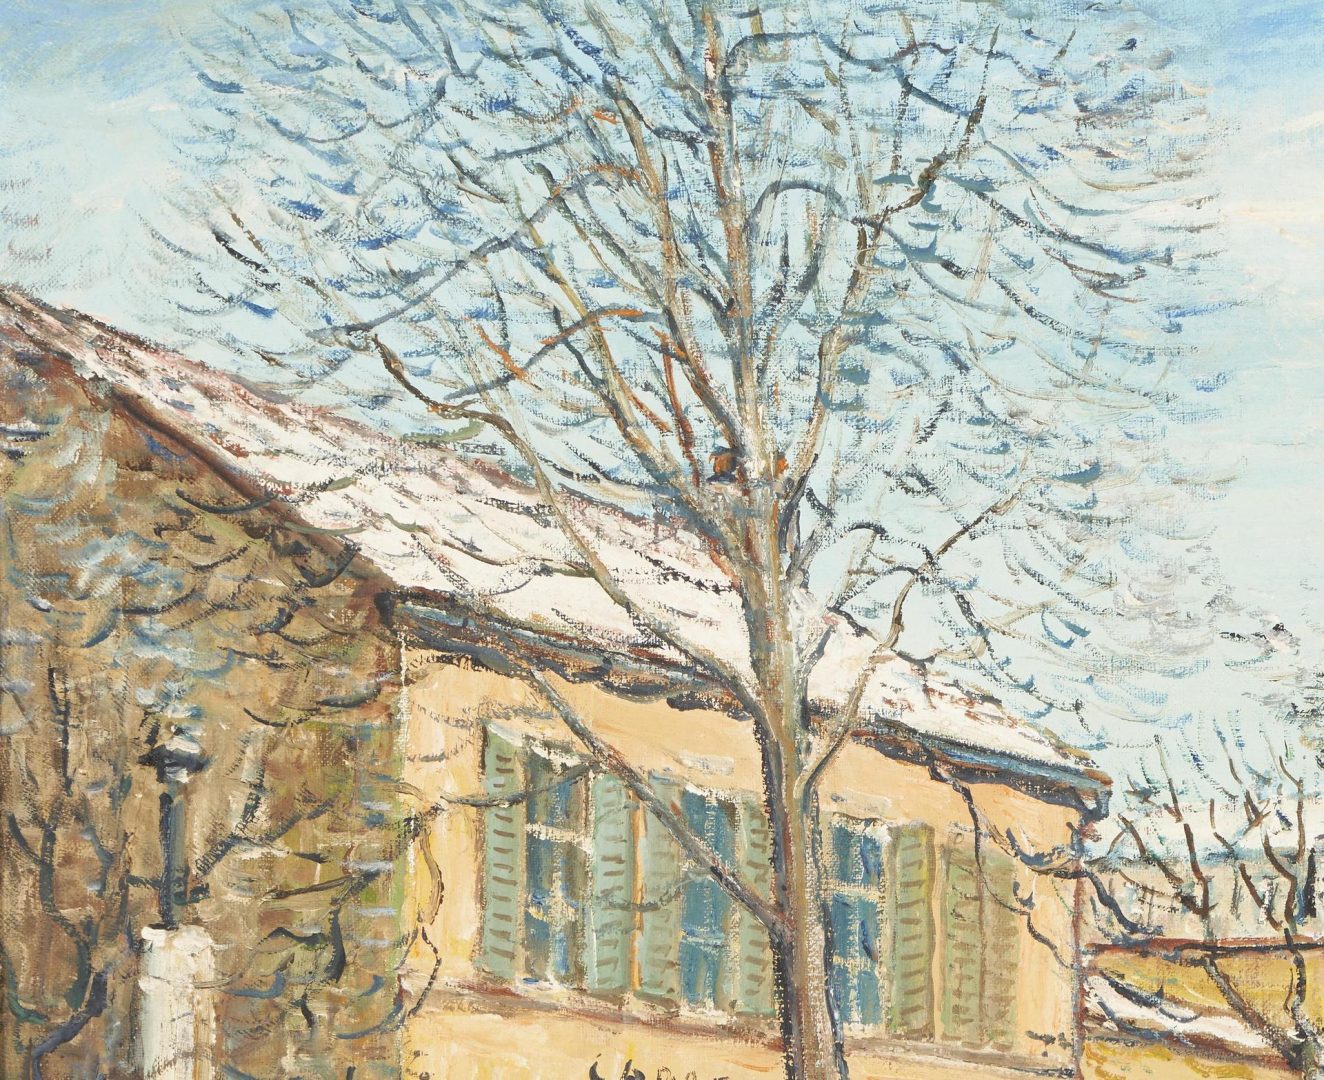 Lot 159: Alois Lecoque O/C Painting, Winter Street Scene